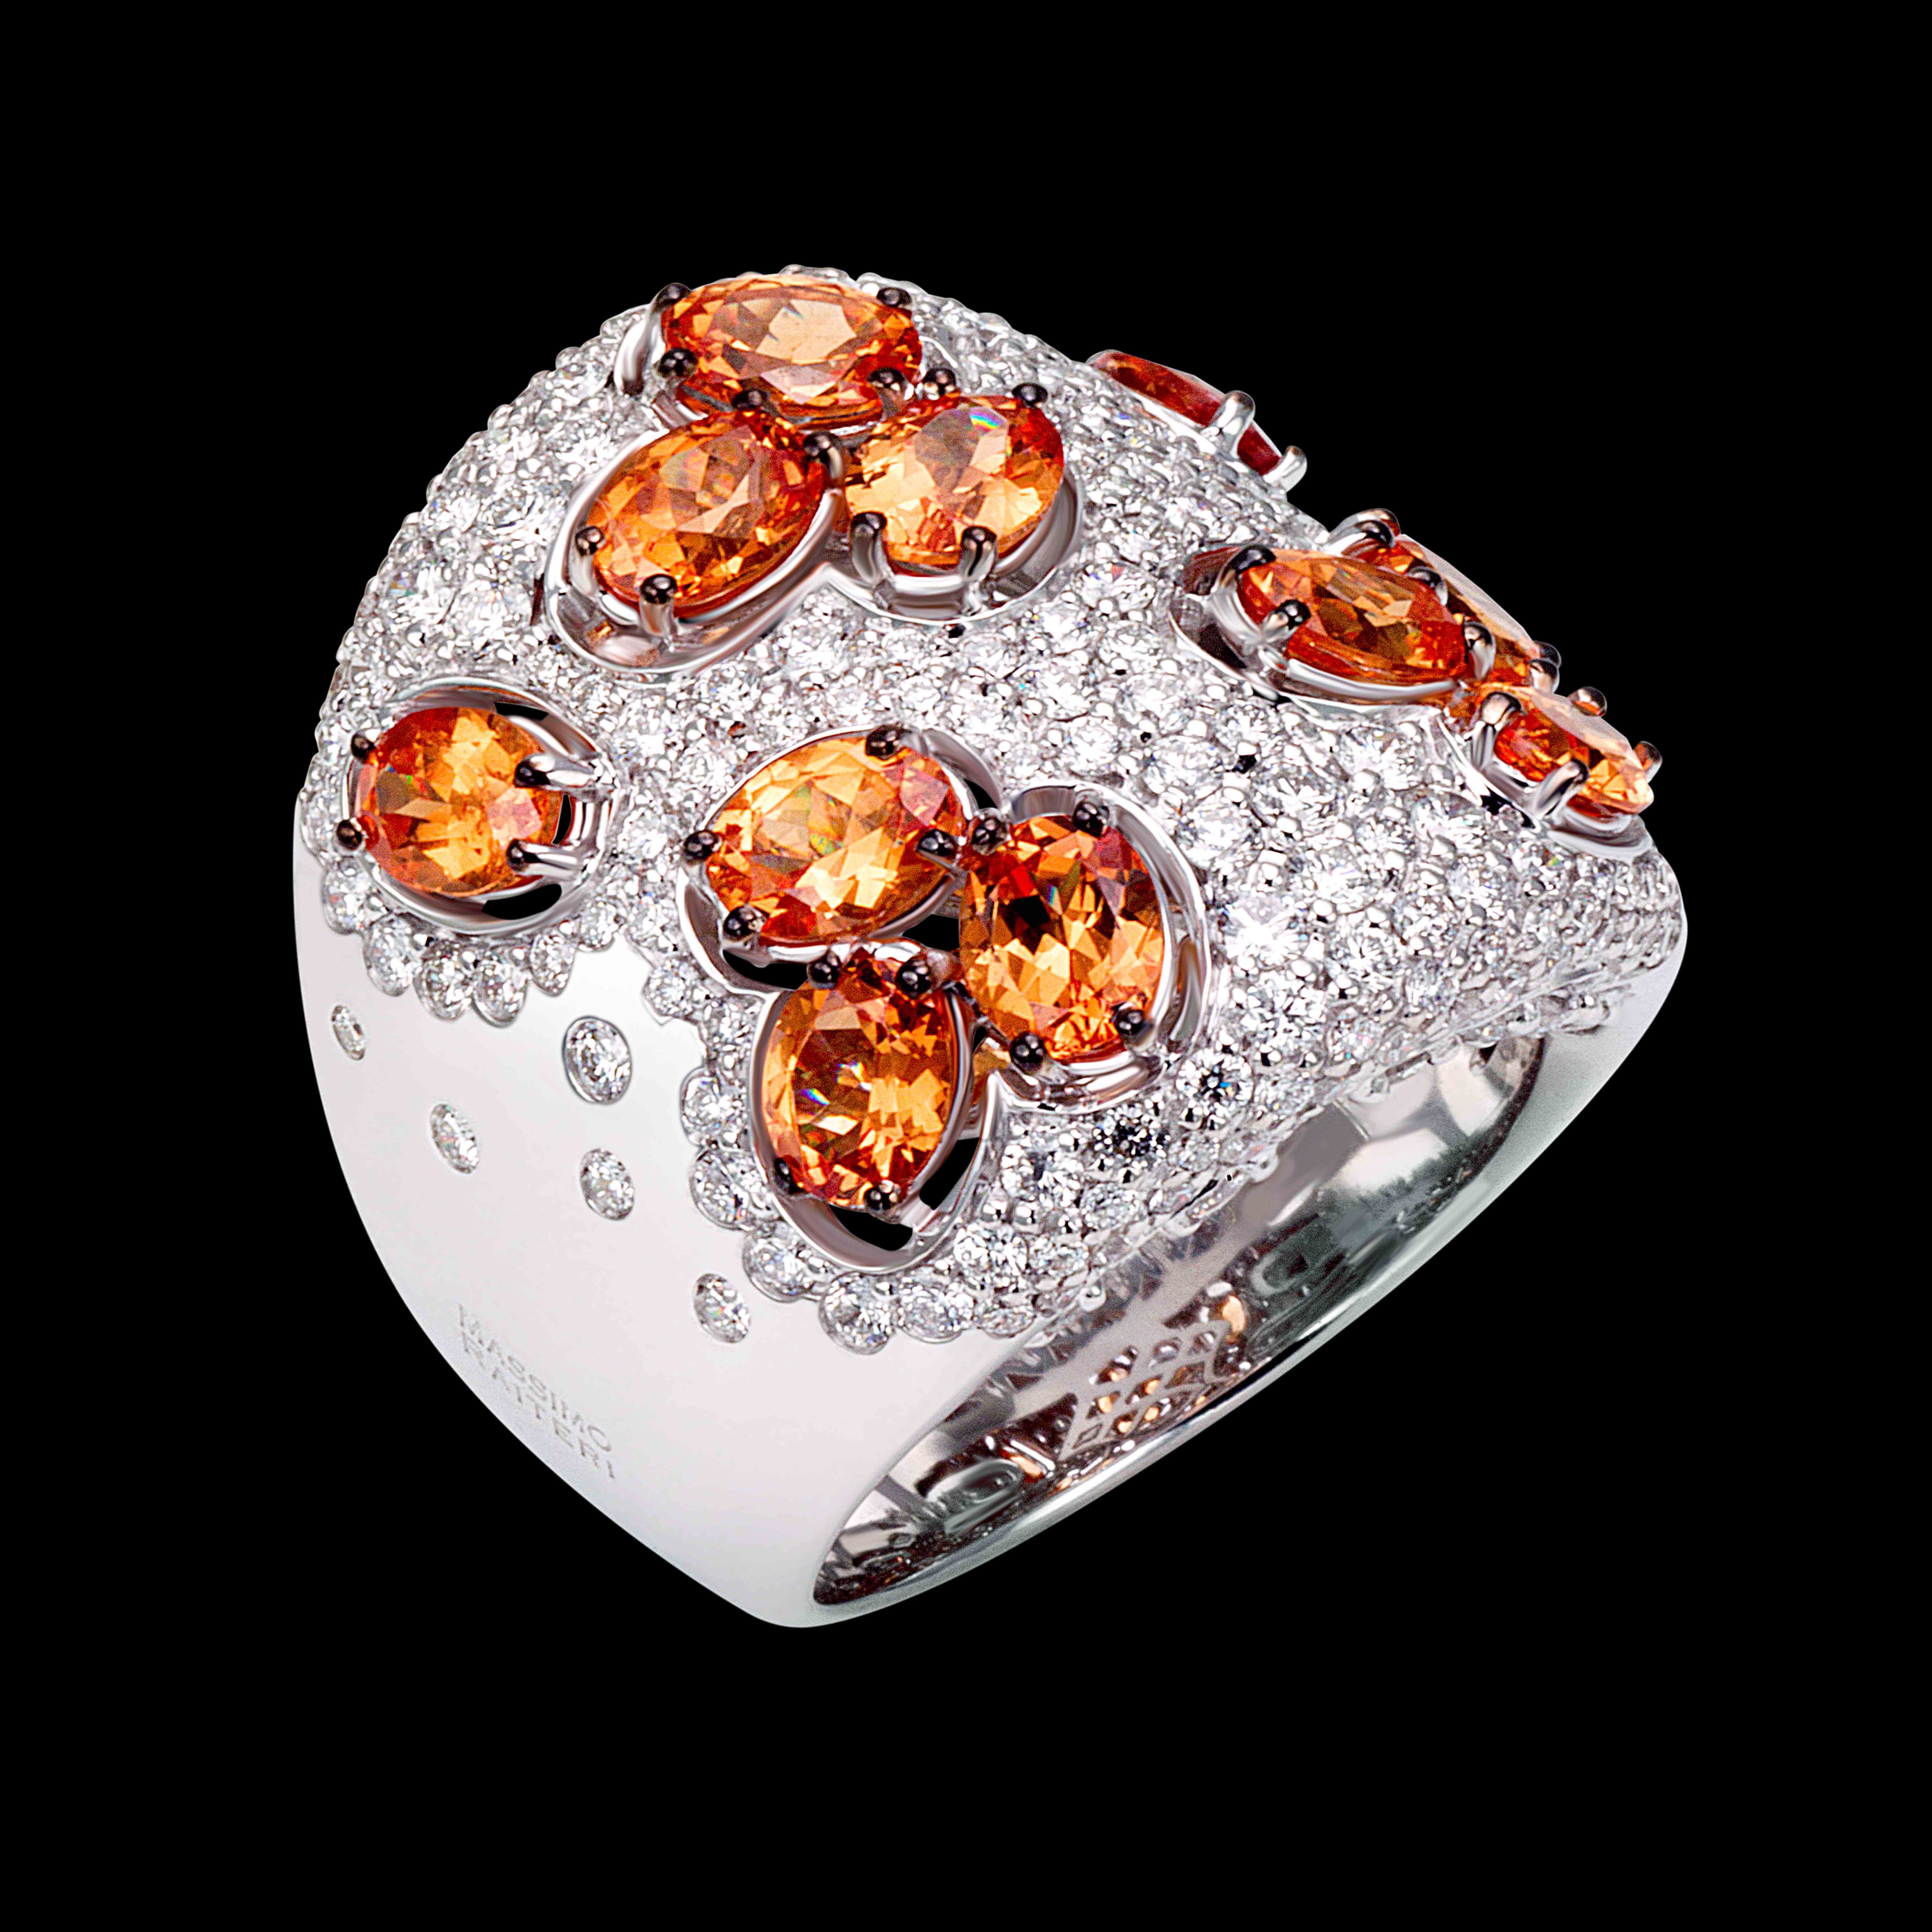 AN 2927 GR - Massimo Raiteri Exclusive Jewellery mandarin orange garnet deising jewelry